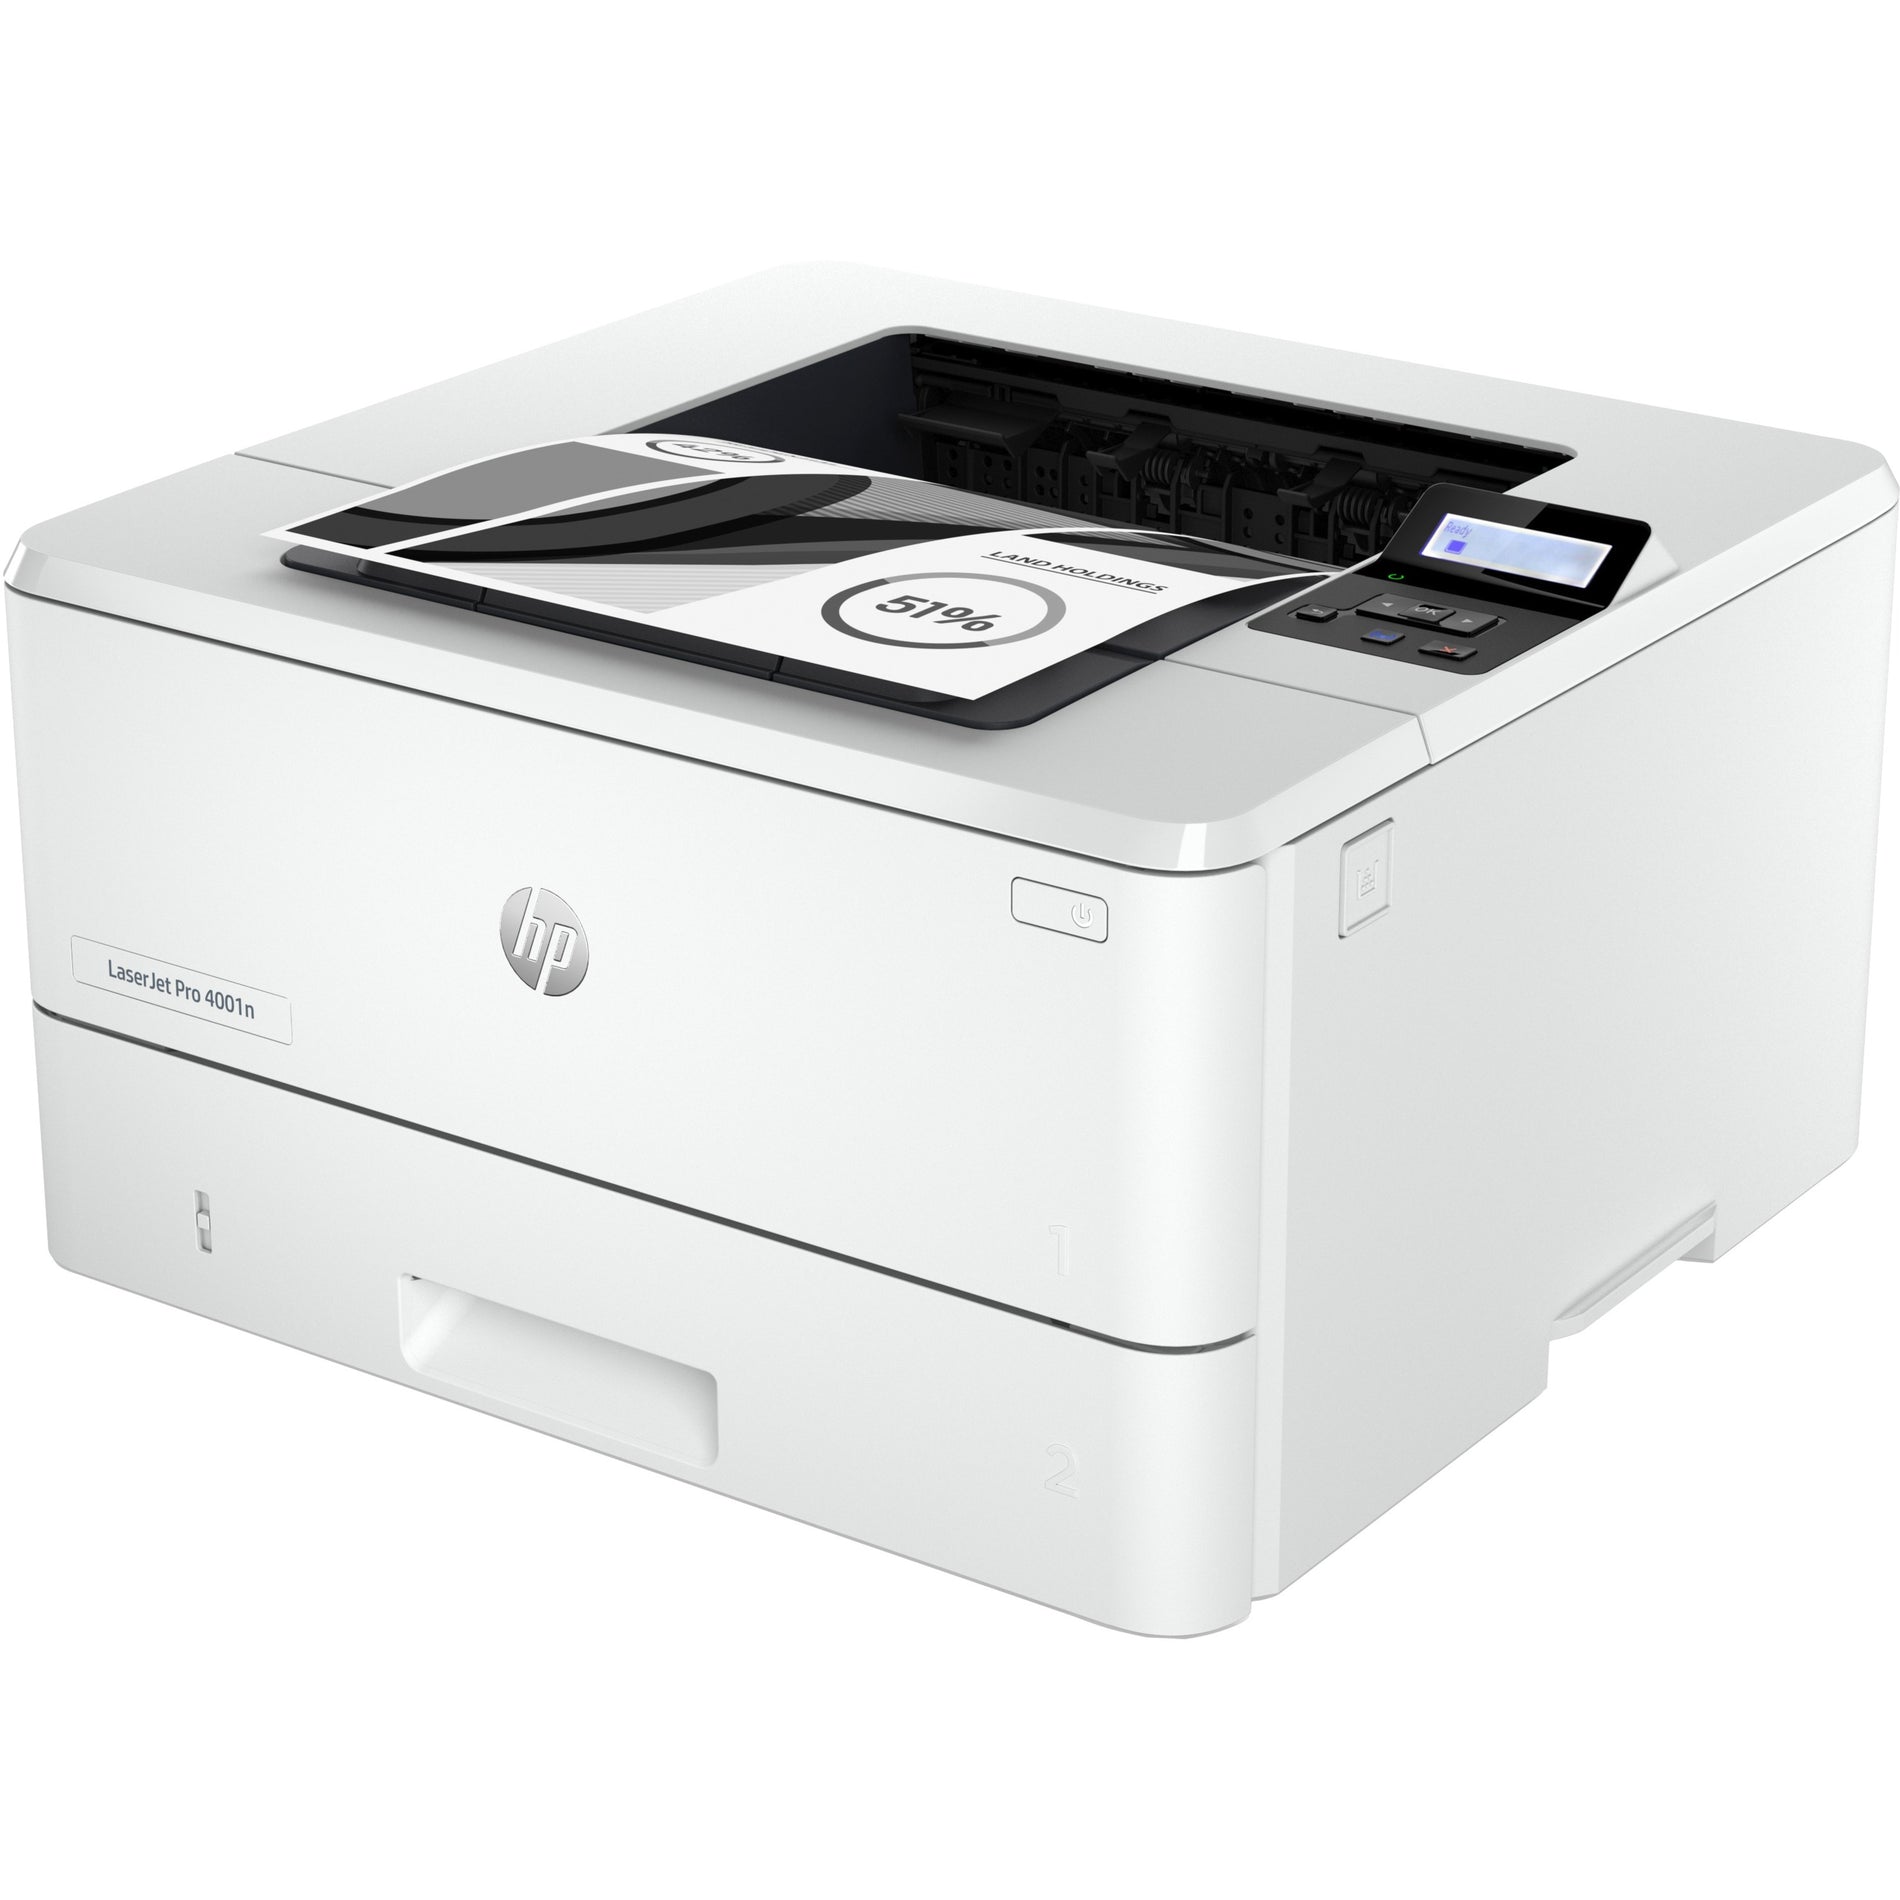 HP LaserJet Pro 4001 4001n Desktop Laser Printer - Monochrome (2Z599F#BGJ)